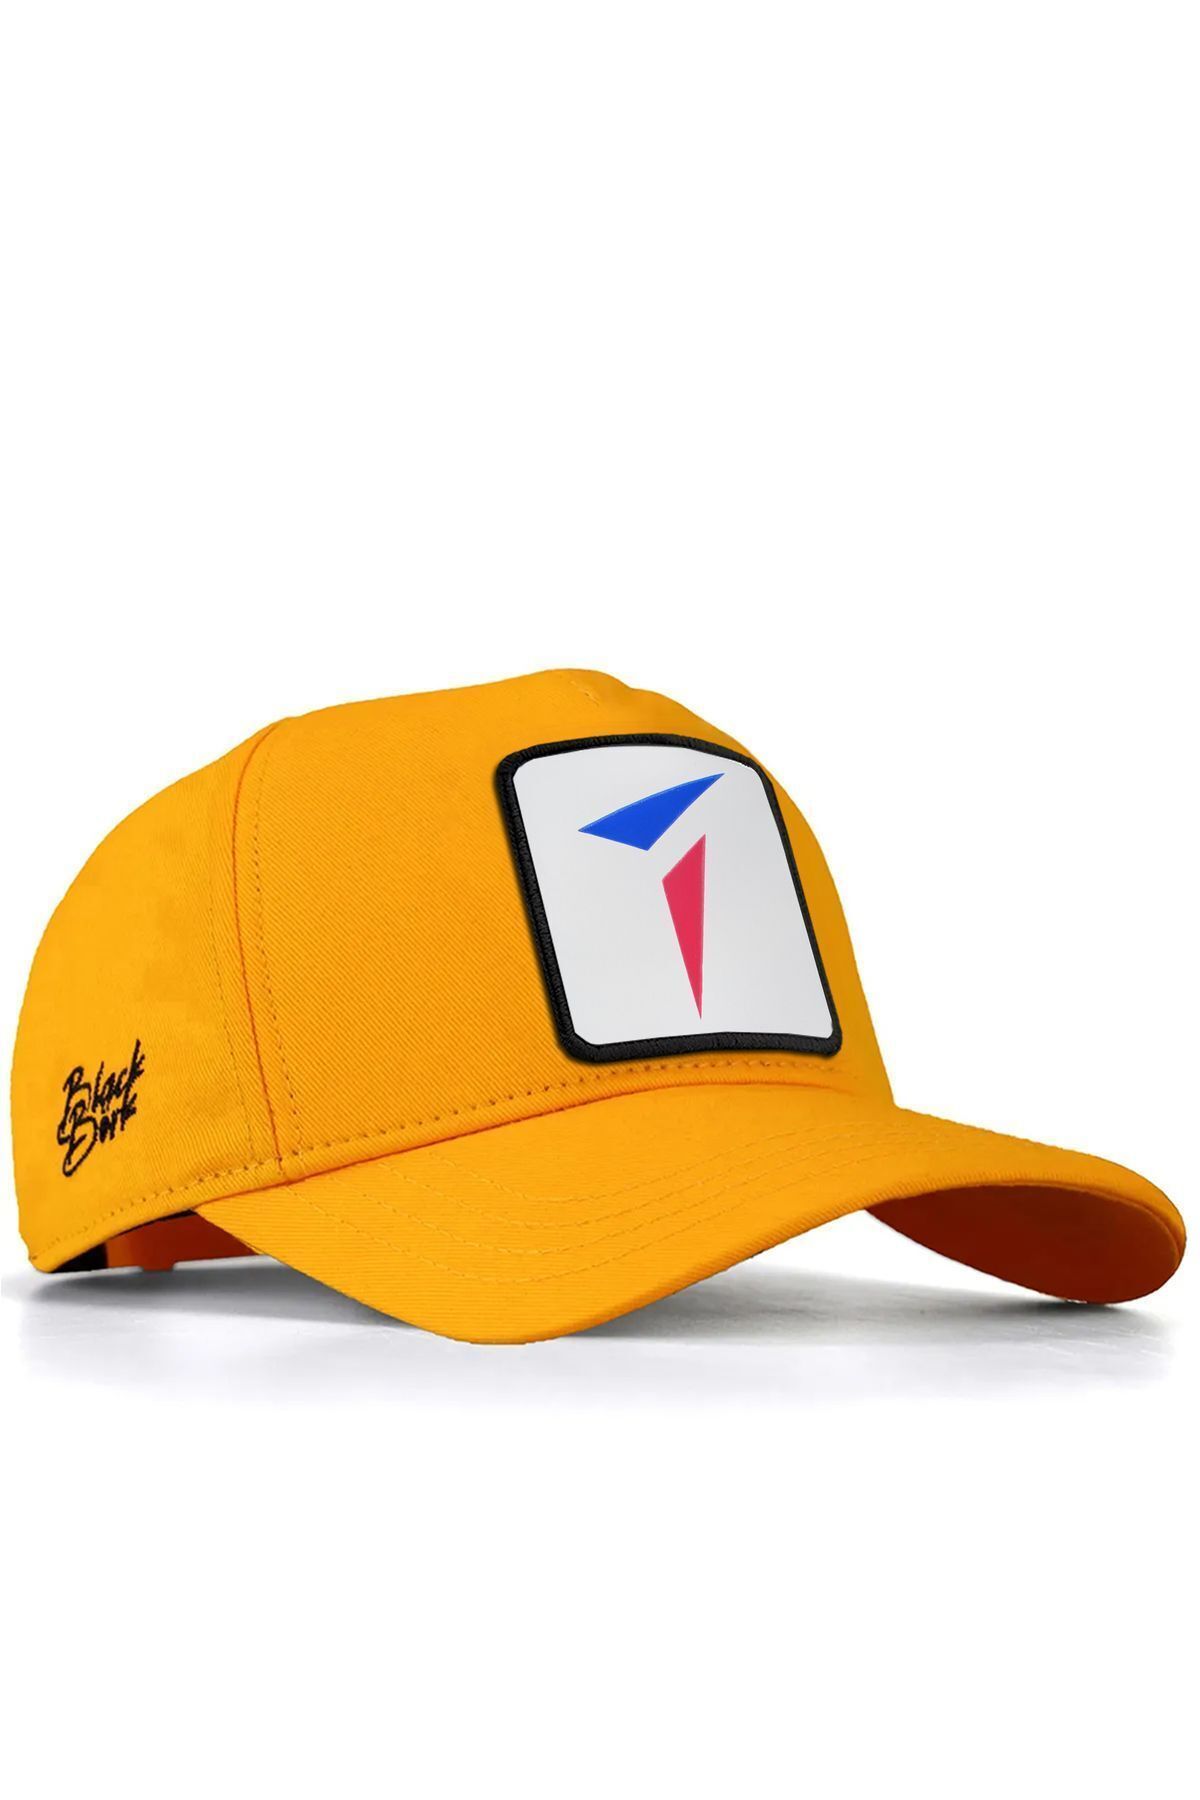 BlackBörk V1 Baseball Ikon - 1 Kaan Lisanlı Sarı Şapka